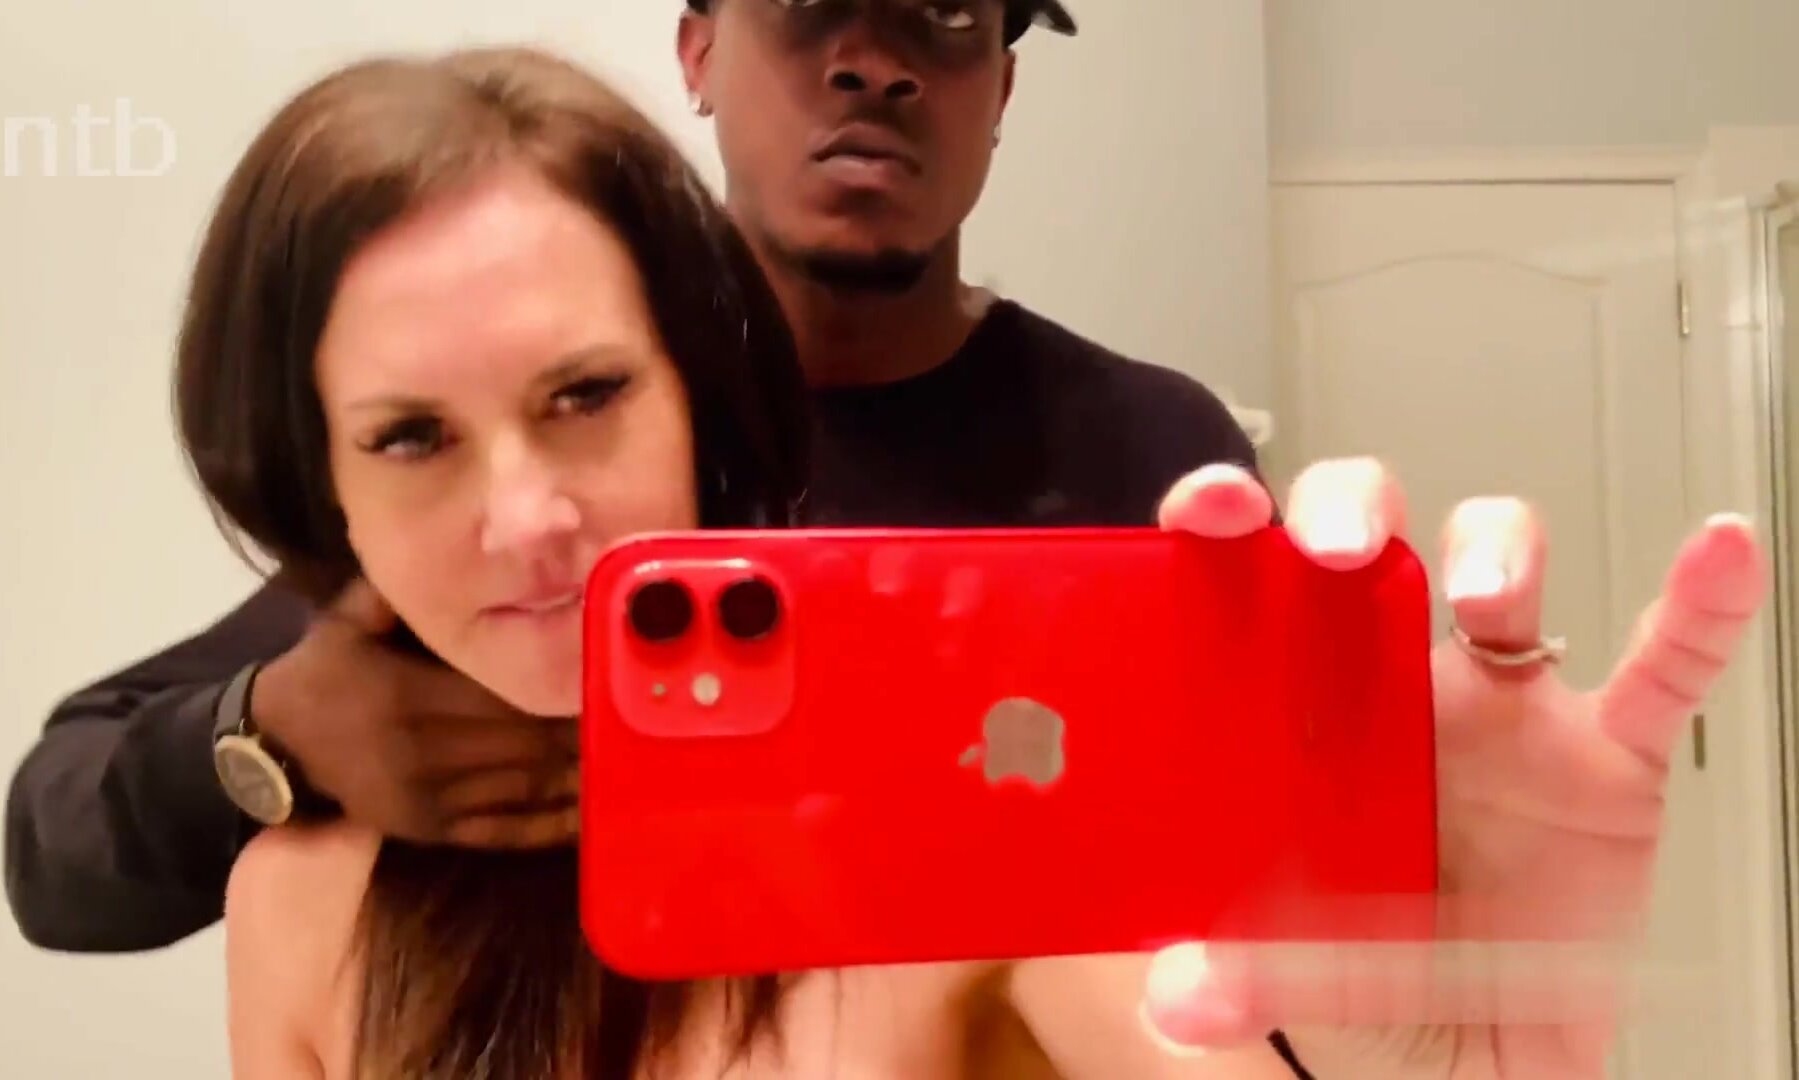 Hotwife Fucking Her Bull in the Hotel Bathroom Taking a Selfie